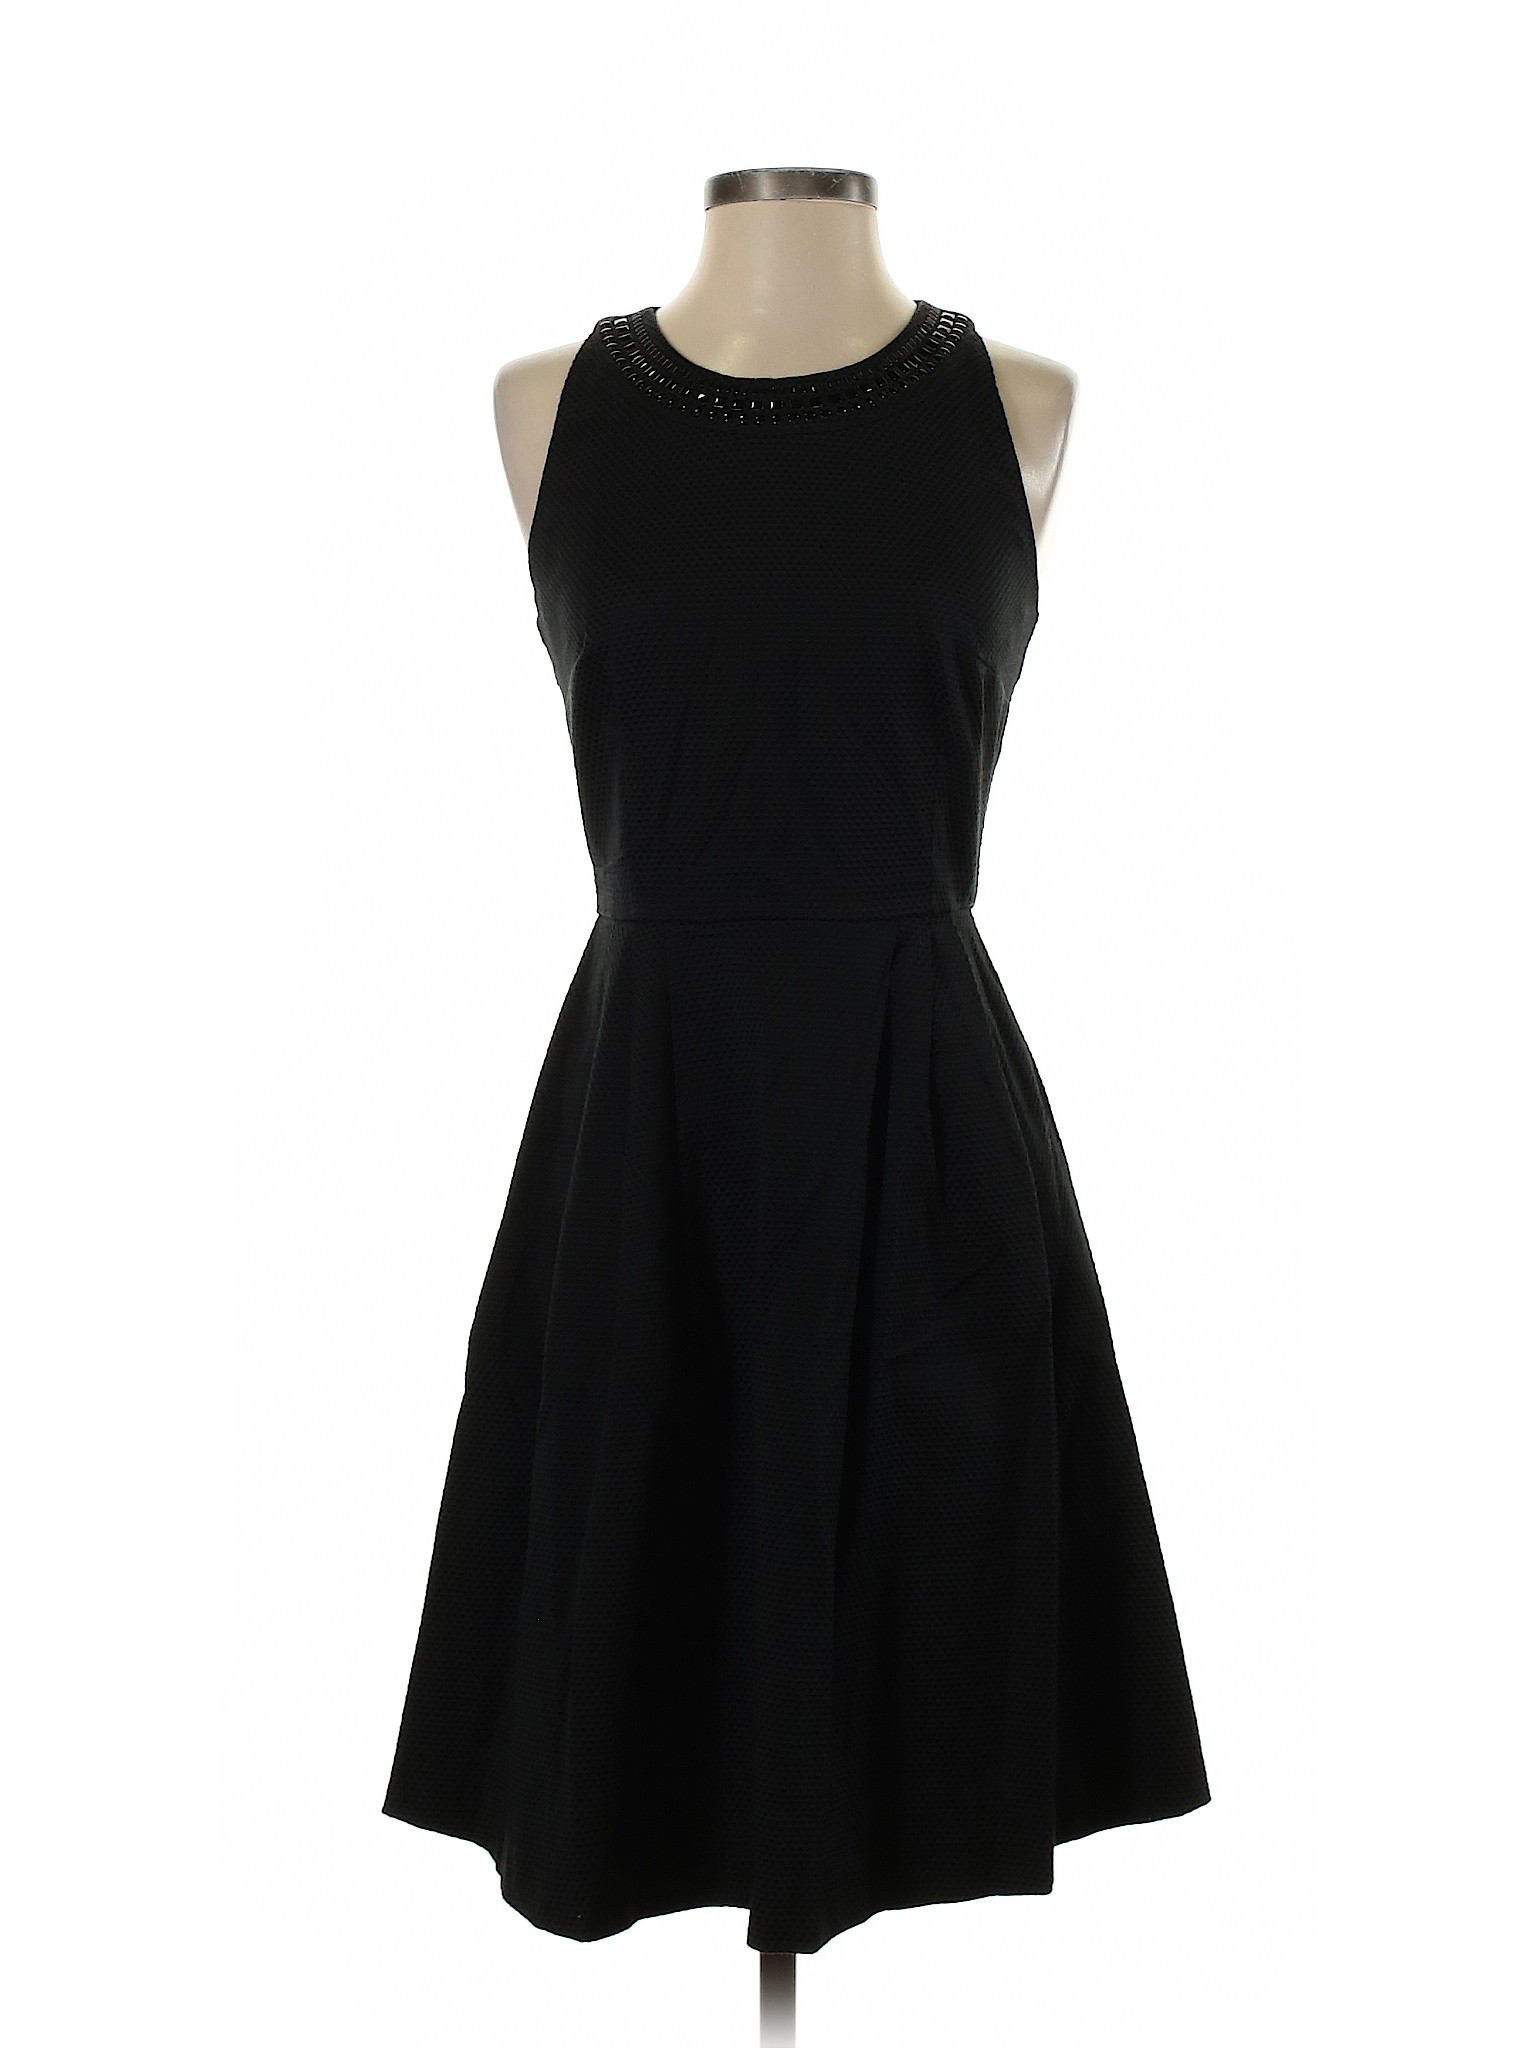 New York & Company Women Black Cocktail Dress 2 | eBay